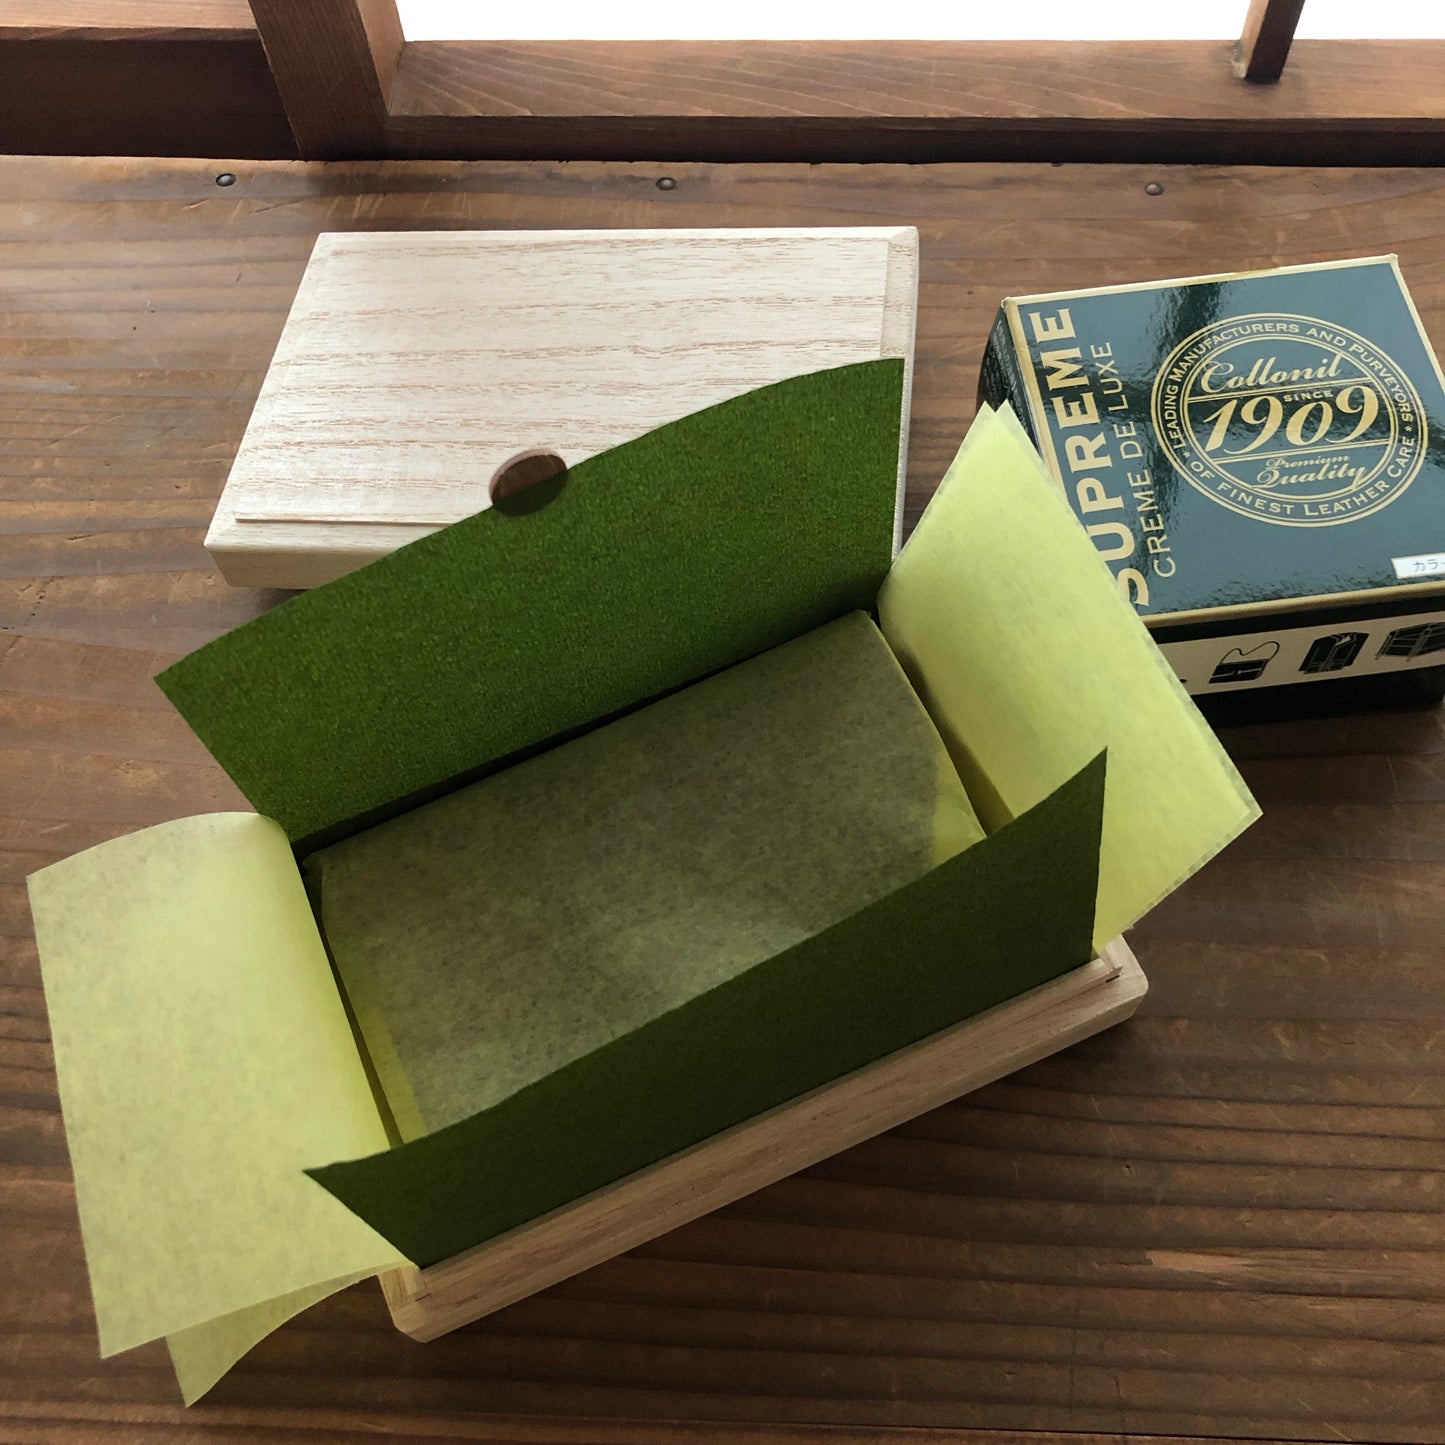 A Kiribako Gift Wrapping / 桐箱に入れたギフトラッピング